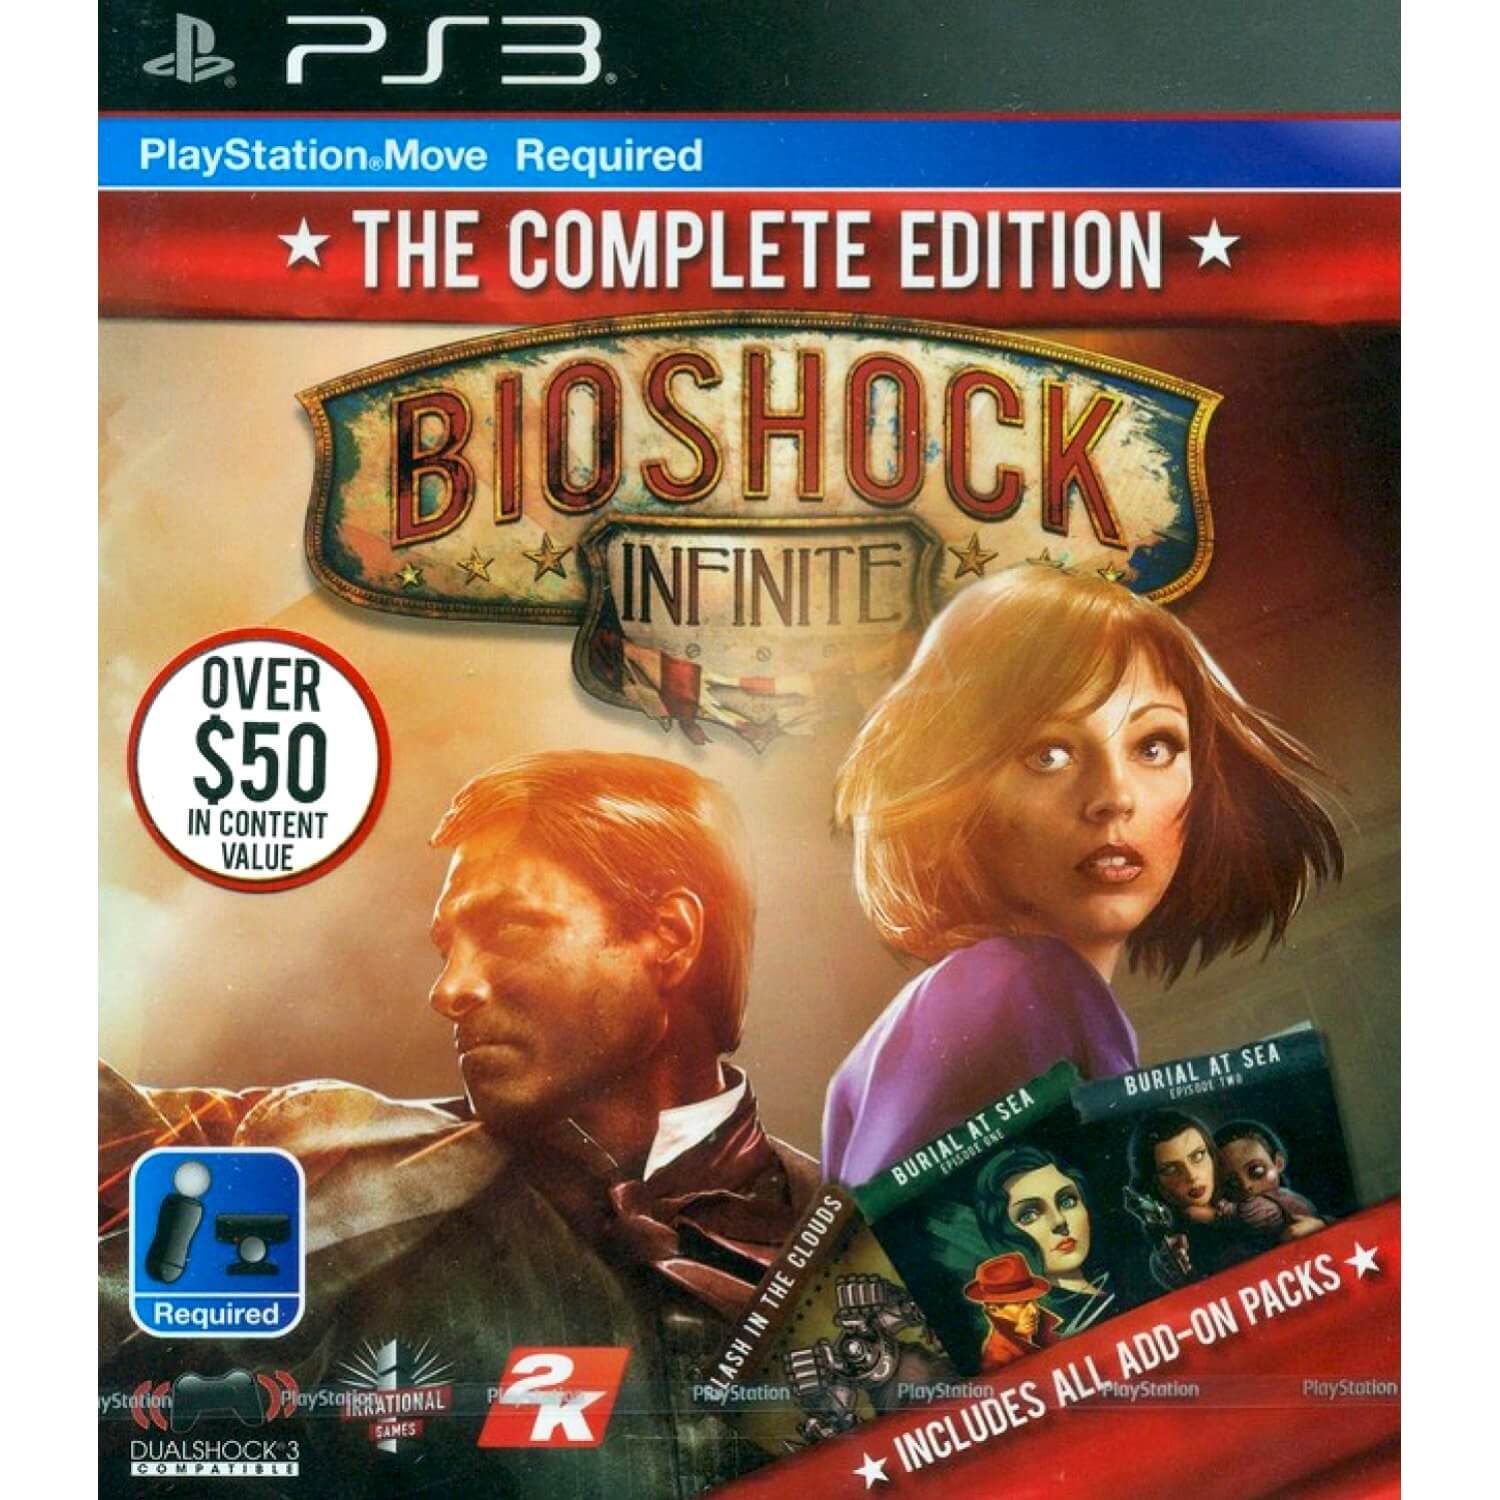 BioShock: Infinite – The Complete Edition